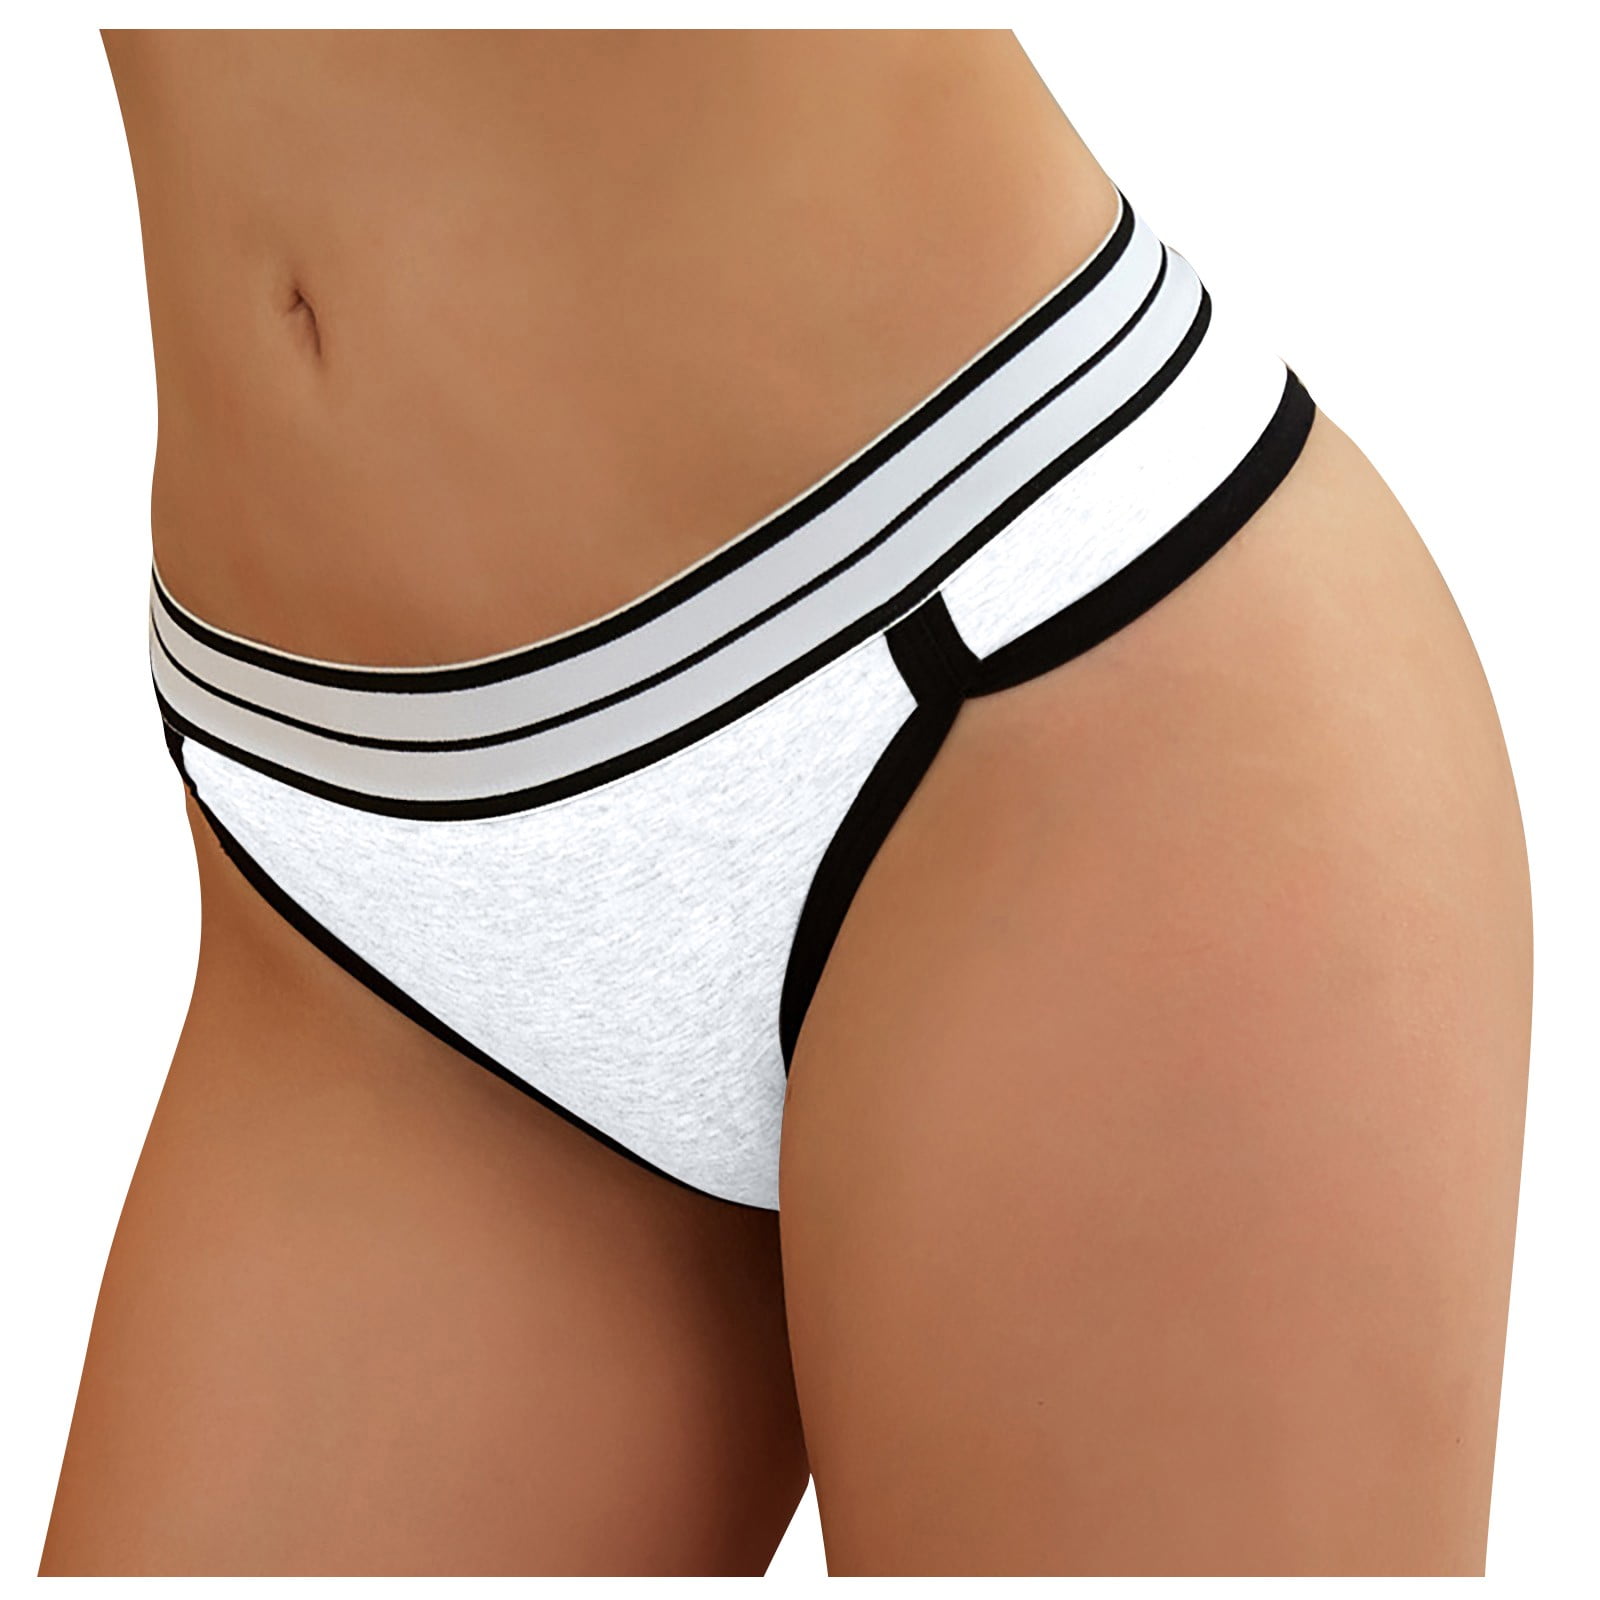 Umitay crotchless panties Women's Sexy Underwear Stripe G-string Yoga  Fitness Pants Underwear